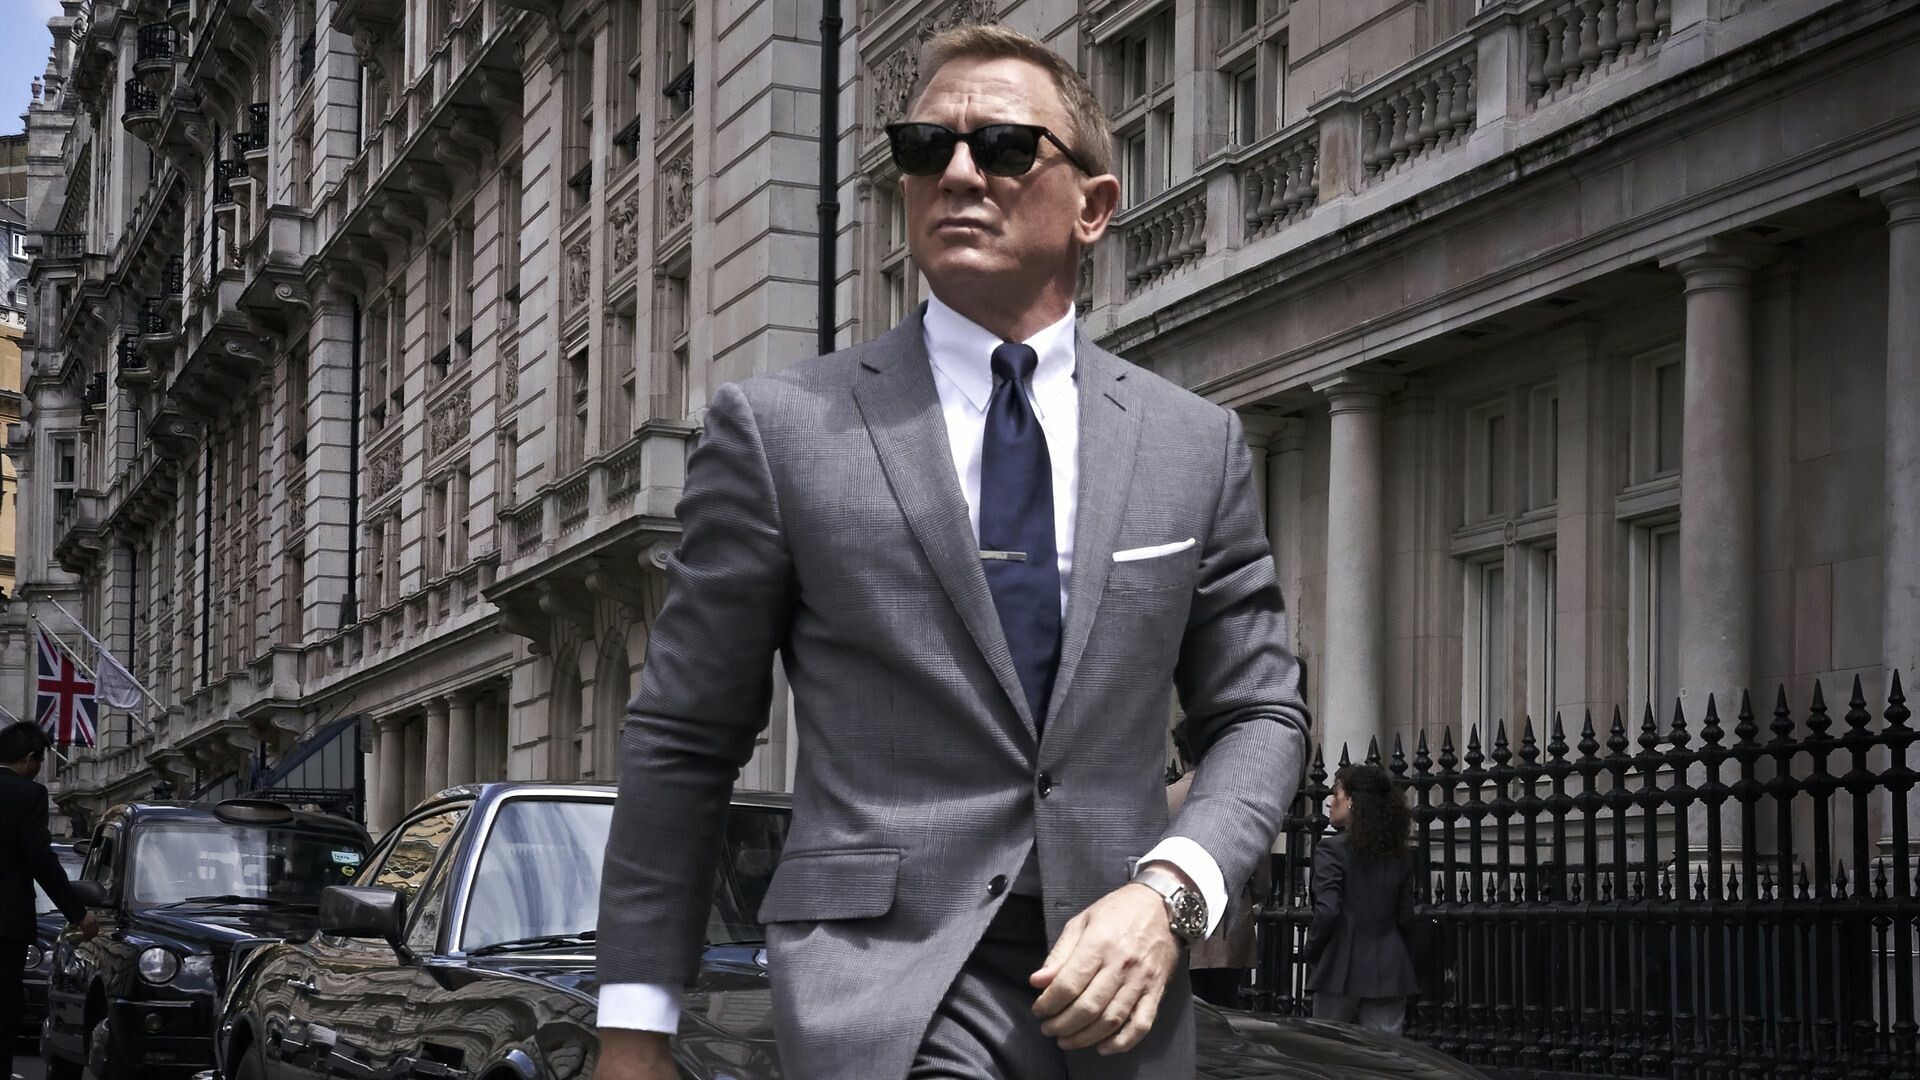 No Time to Die: Daniel Craig’s last film as Bond. 1920x1080 Full HD Wallpaper.